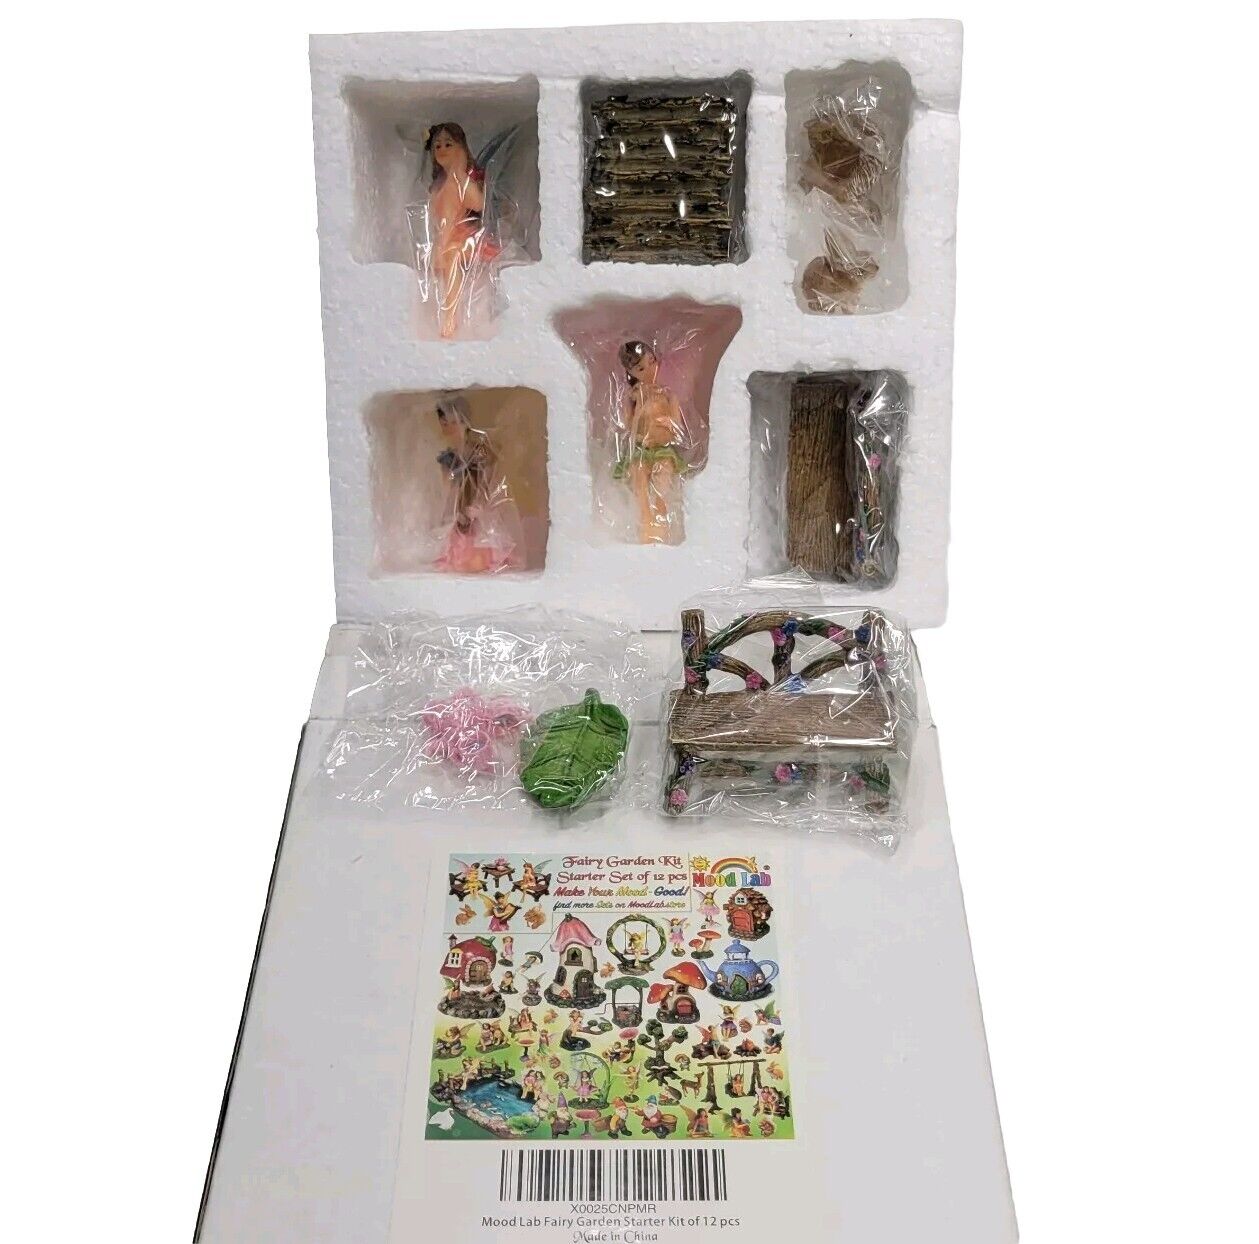 Mood Lab Fairy Garden Miniature Figurines & Accessories Starter Kit 12 Pcs. New